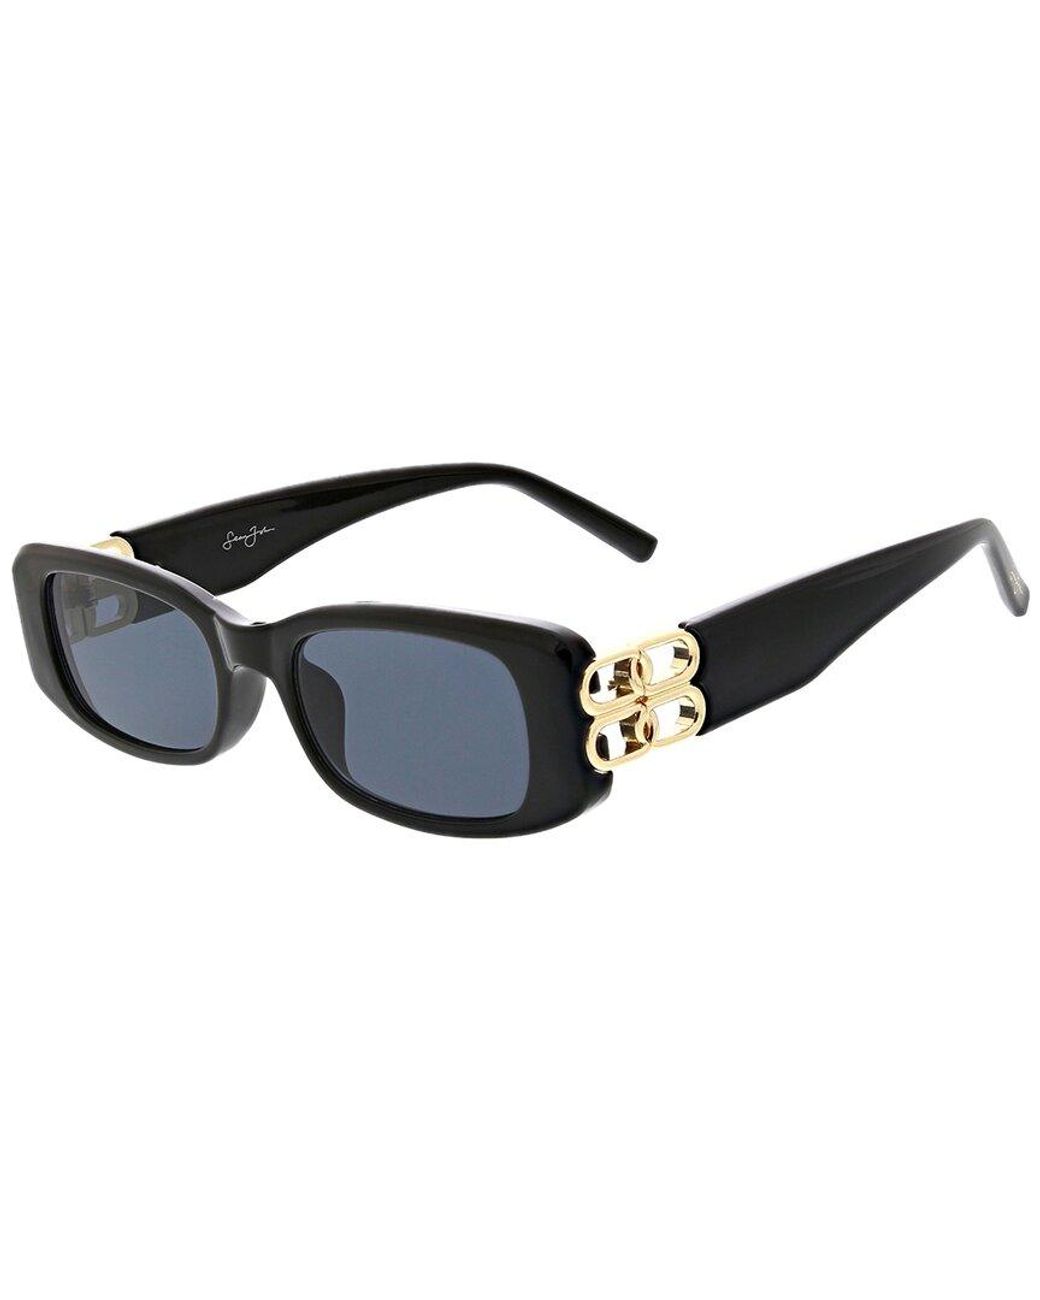 Sean John Sjs2021 52mm Sunglasses in Blue | Lyst